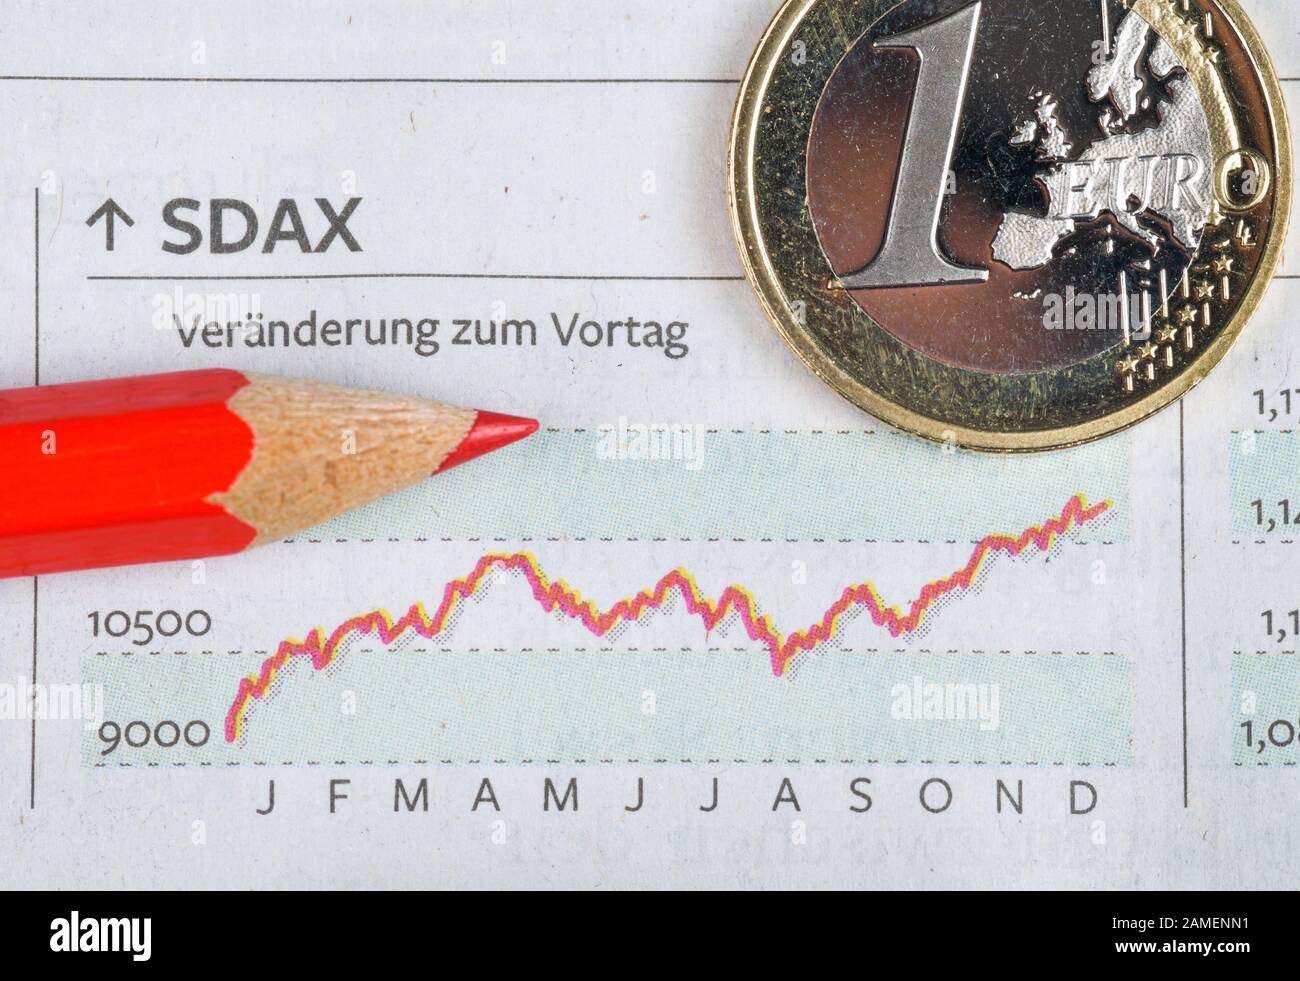 Zeitung, Börsenteil, SDAX Stock Photo